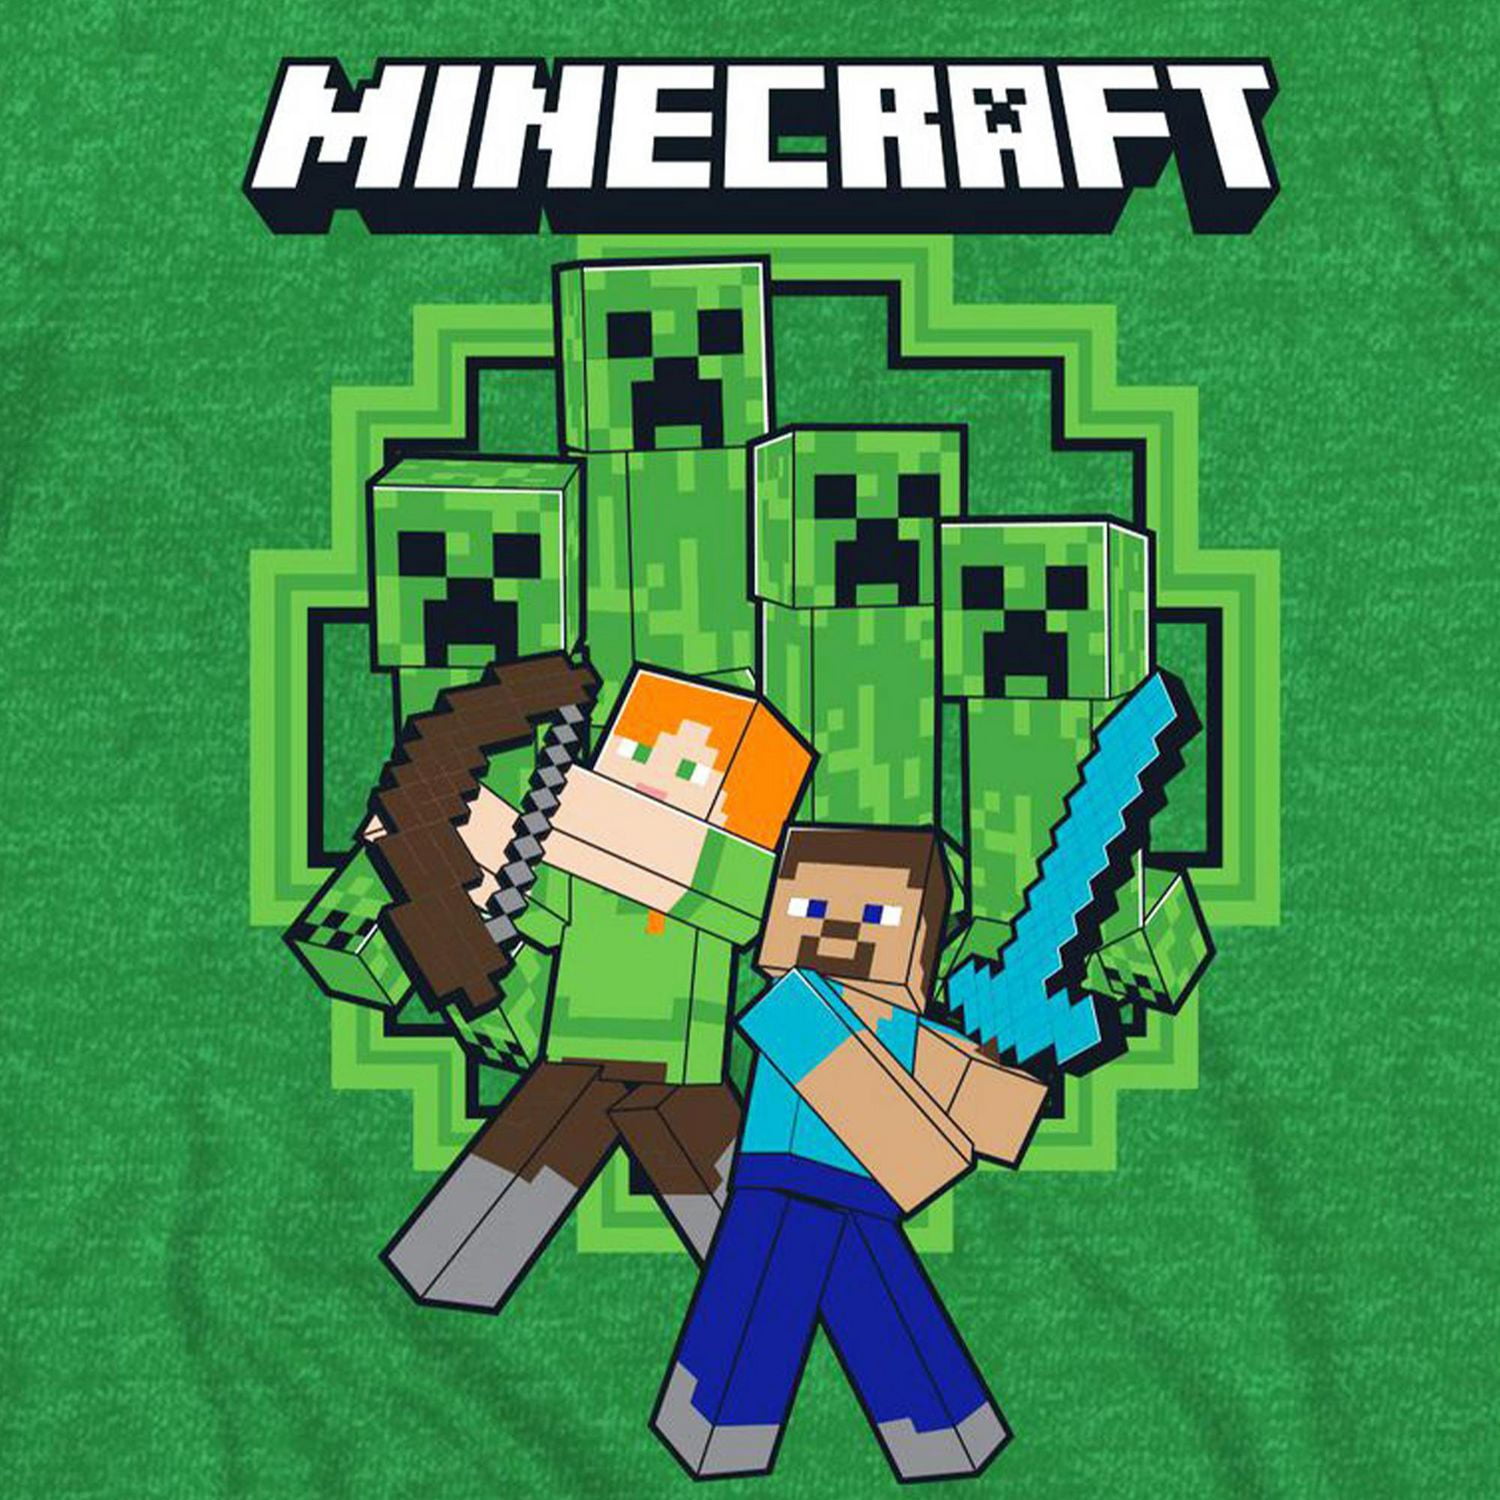 Minecraft Boys' Trunks 2 Pack Green